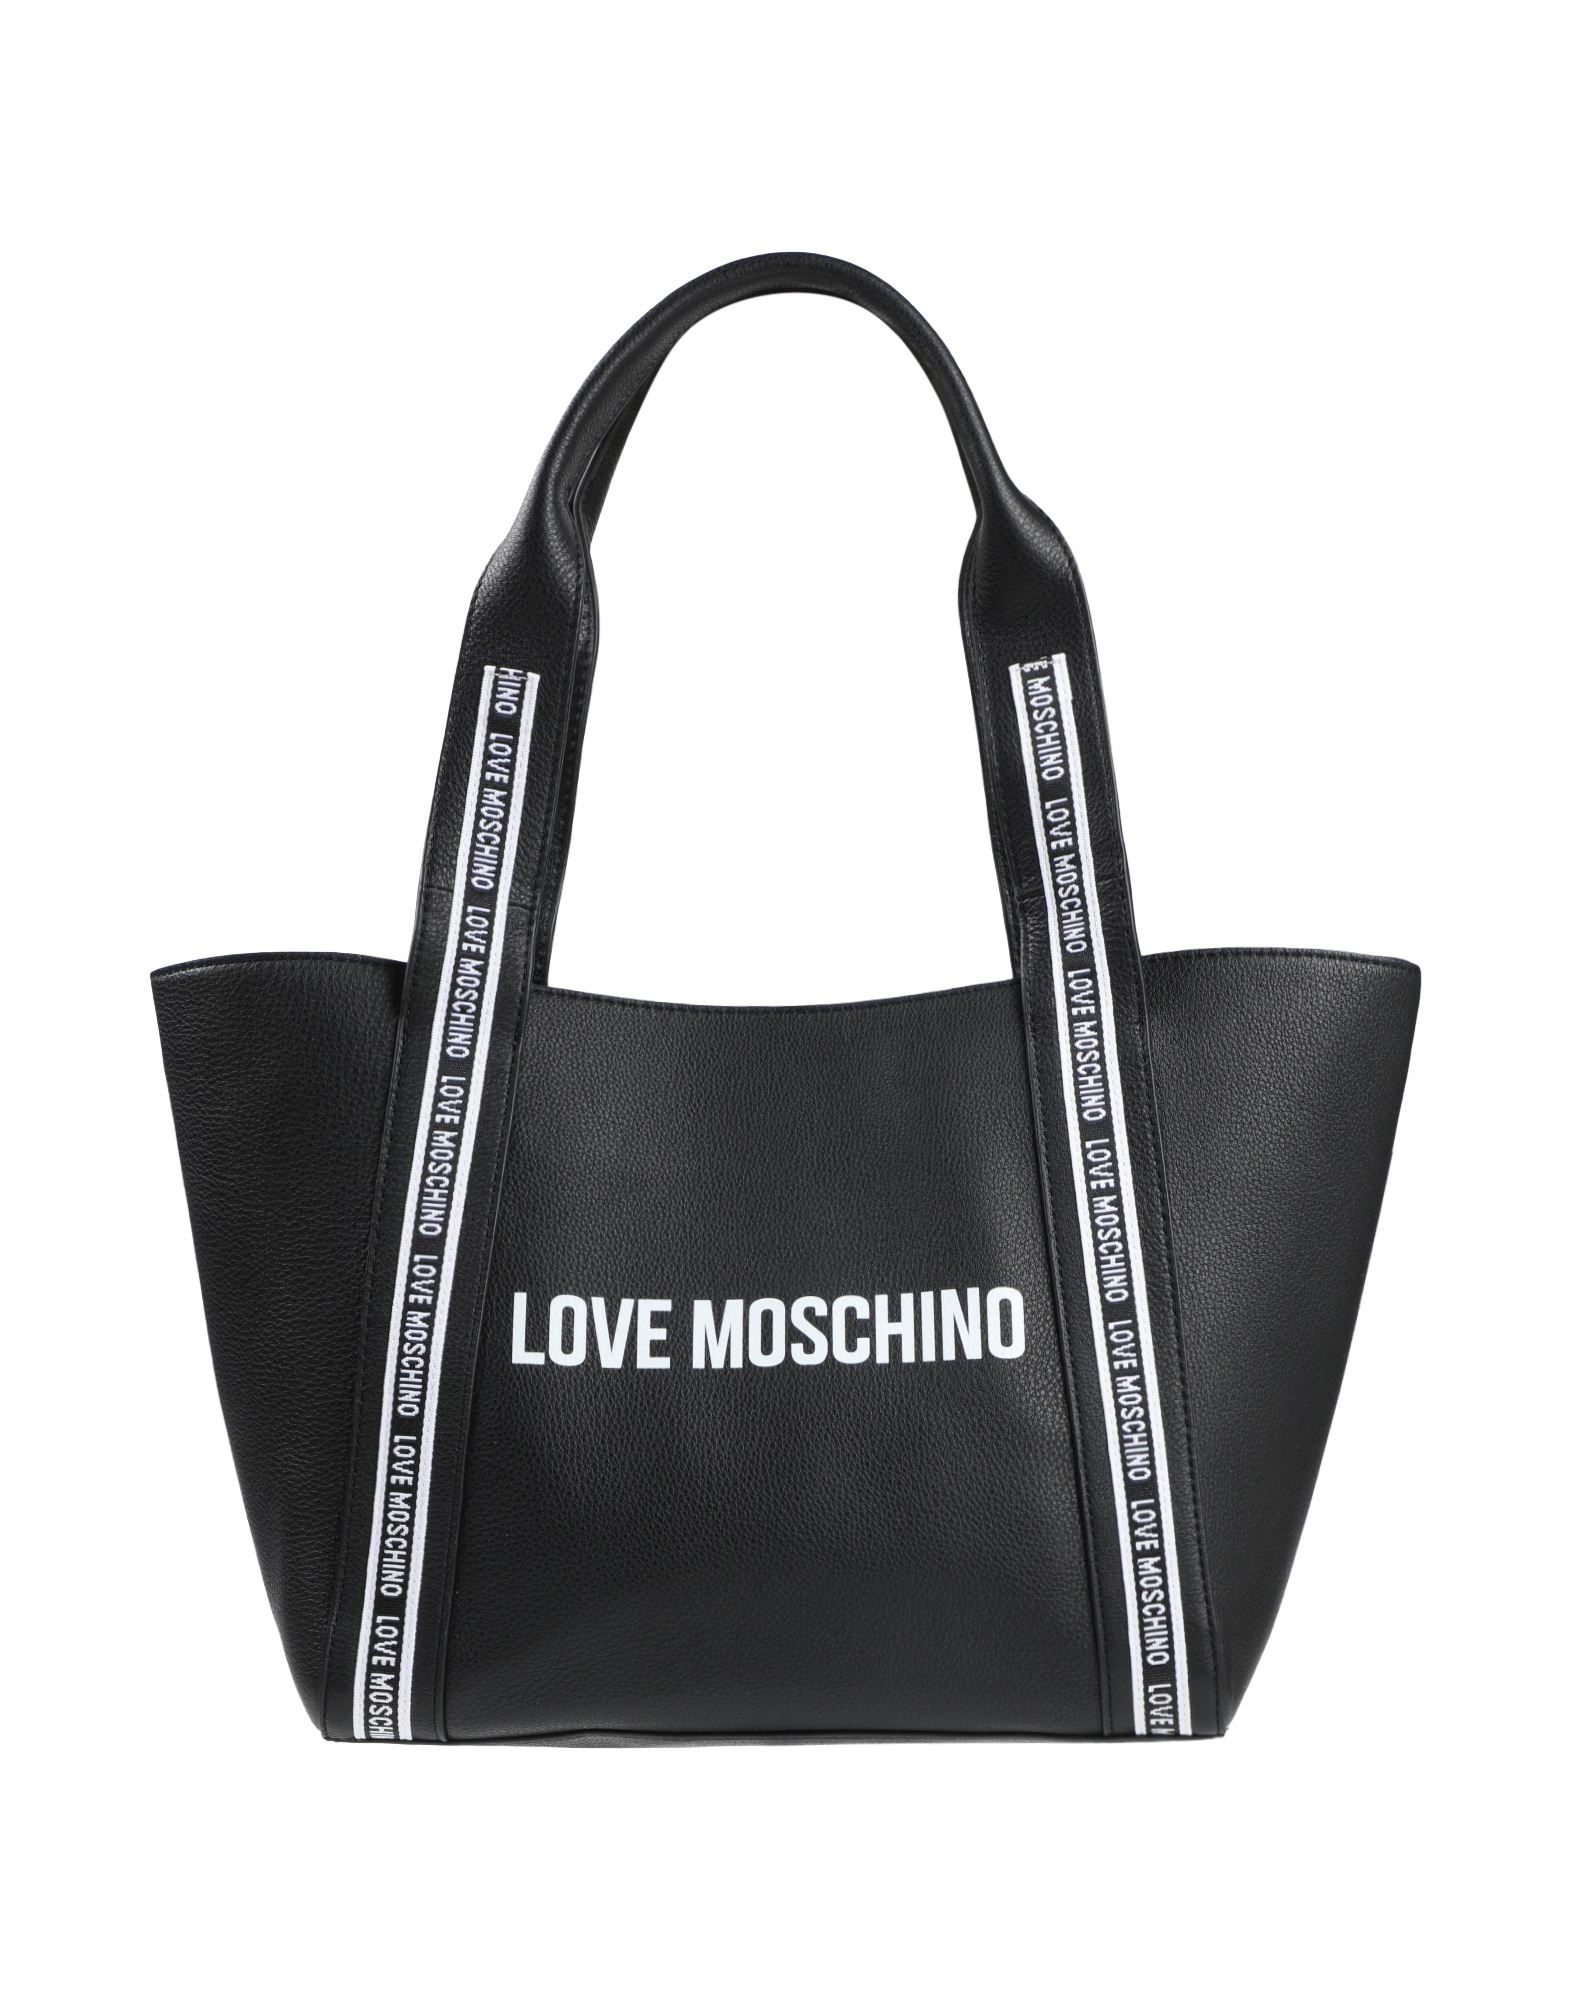 LOVE MOSCHINO Handbags - Item 45553320